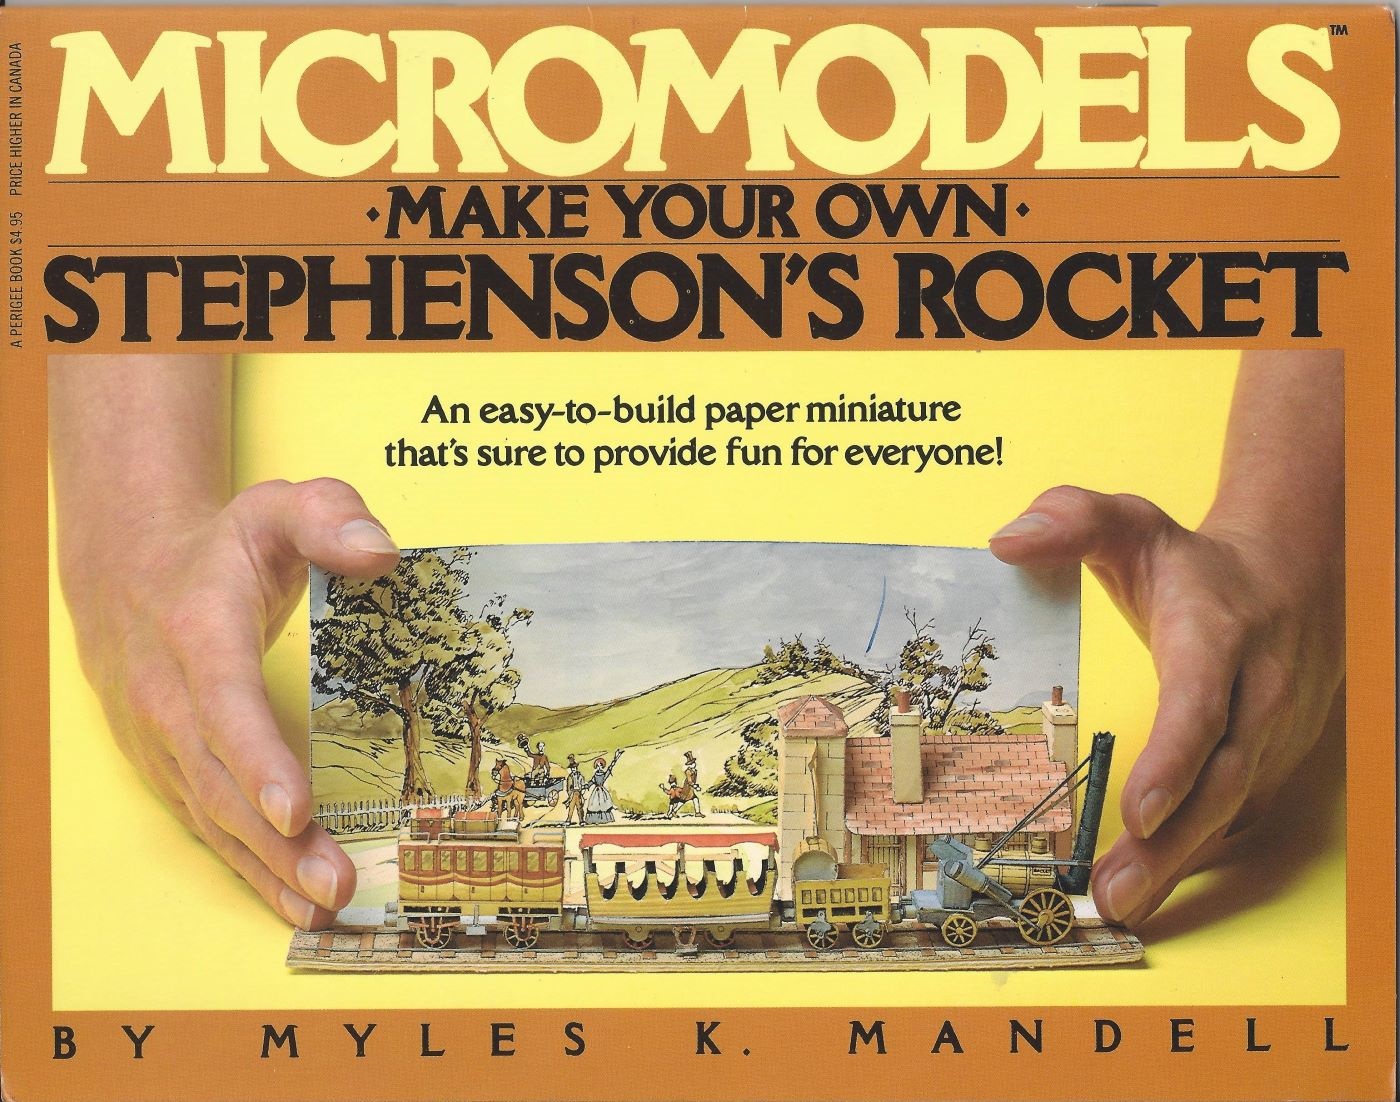 Micromodels 'Make Your Own' Model Kit,
                        Stephenson's Rocket by Myles K. Mandell